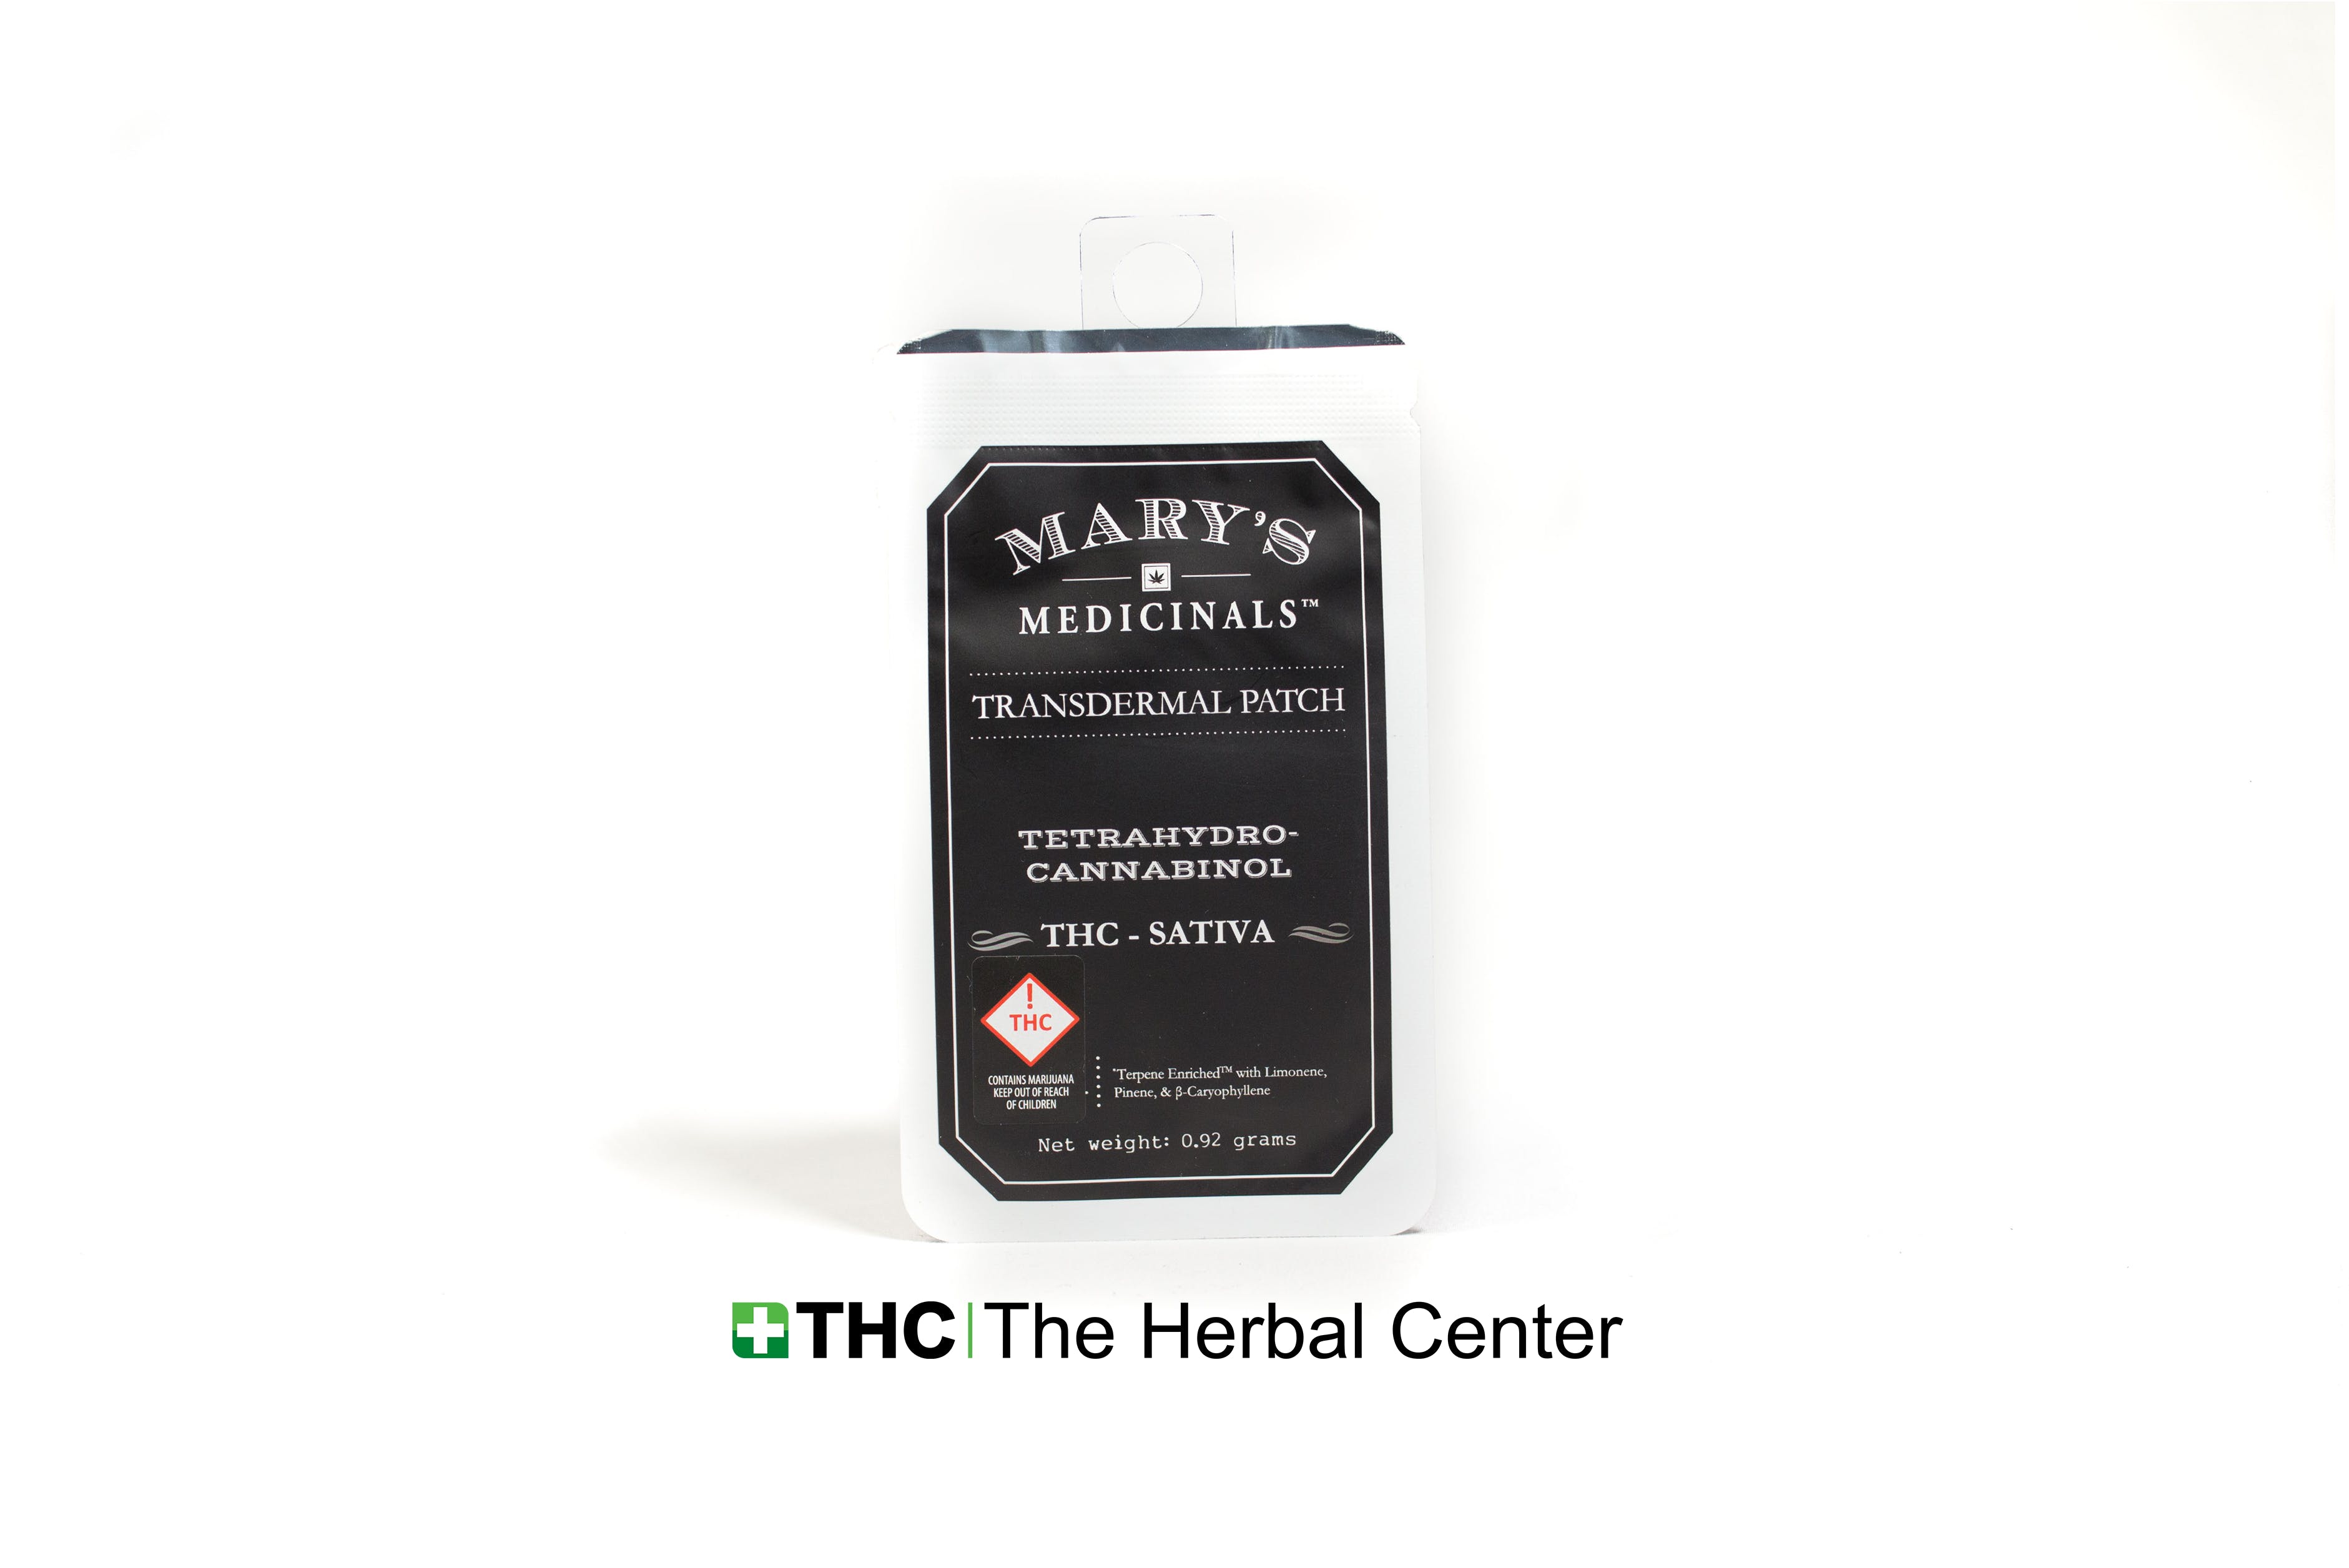 topicals-marys-medicinals-transdermal-patch-a-c2-80-c2-93-thc-sativa